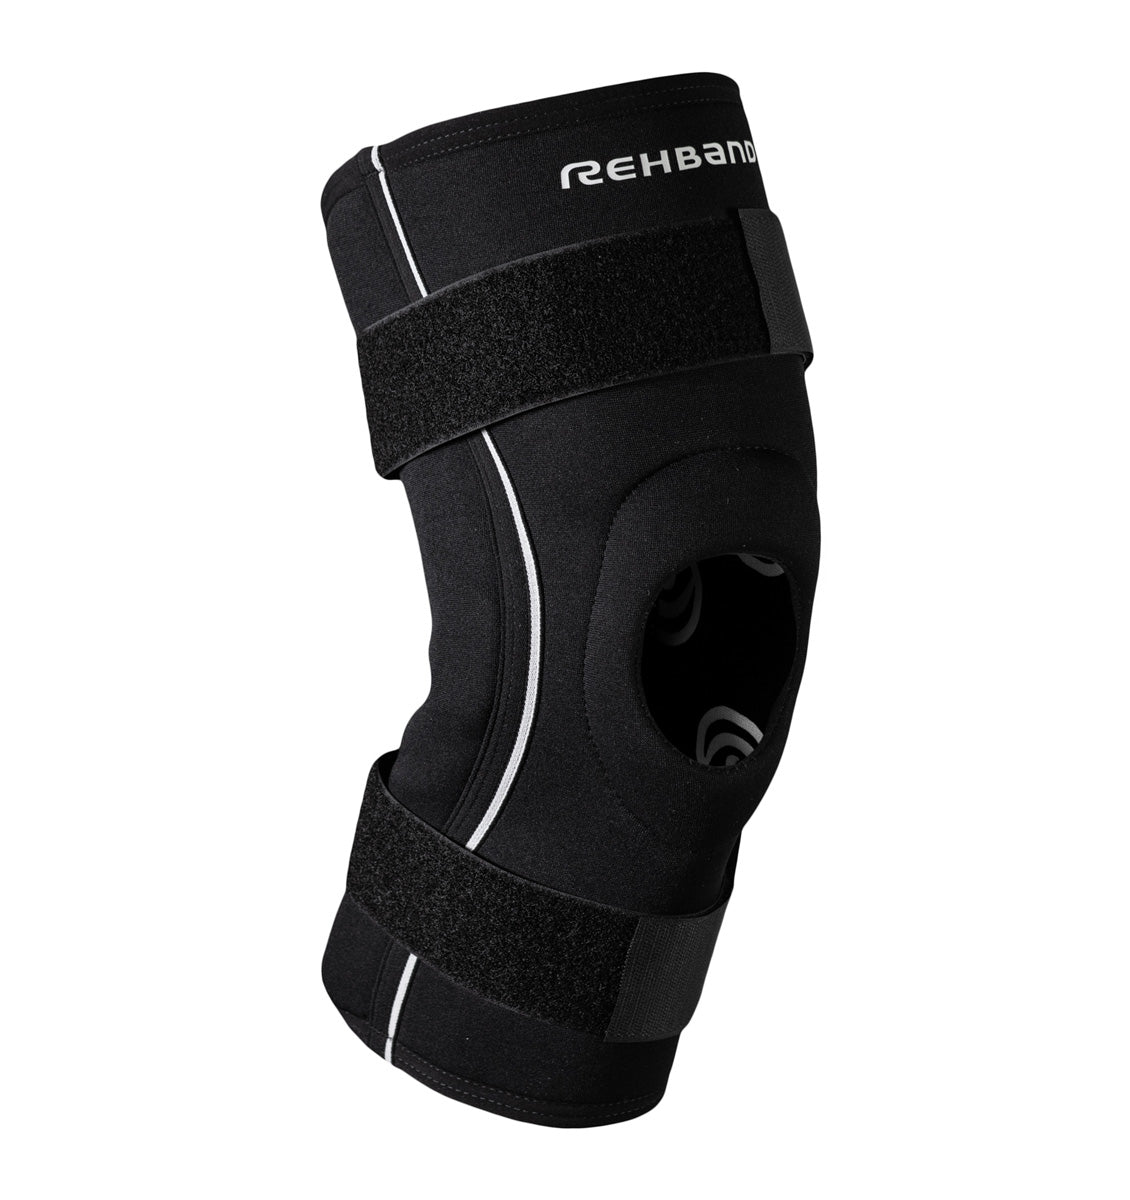 125606-01 Rehband UD X Stable Knee Brace Black 5mm - Front